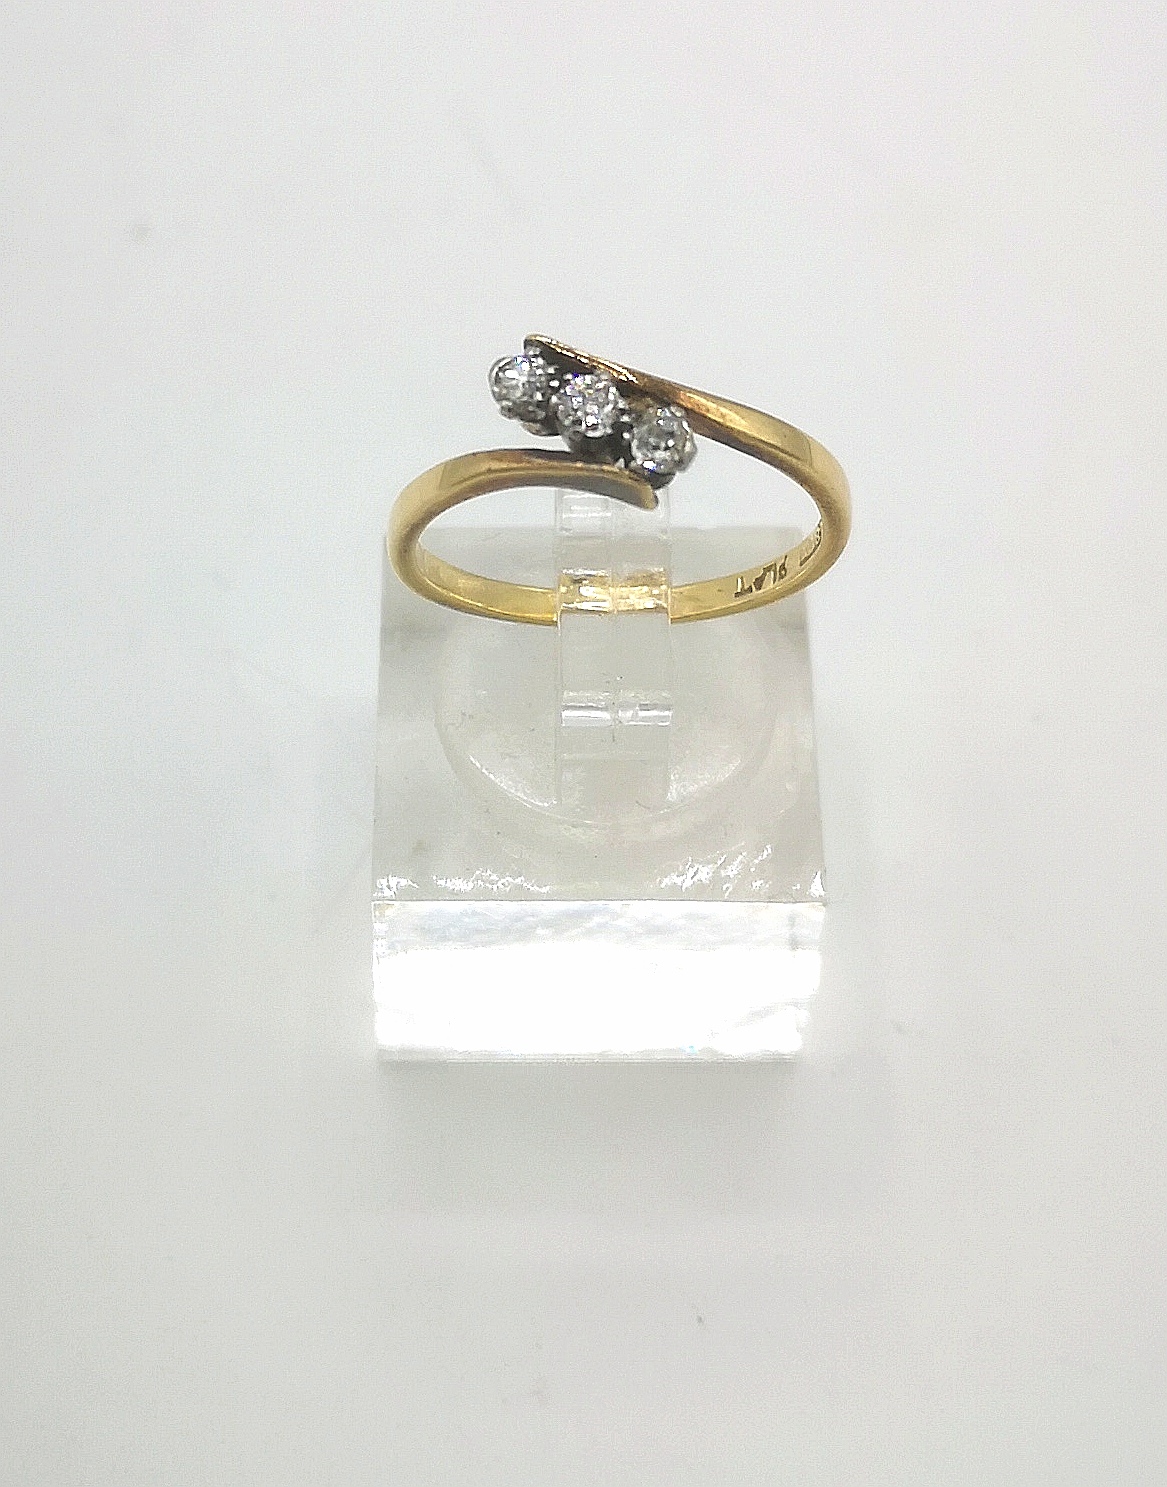 18ct gold and three diamond ring - Image 2 of 6